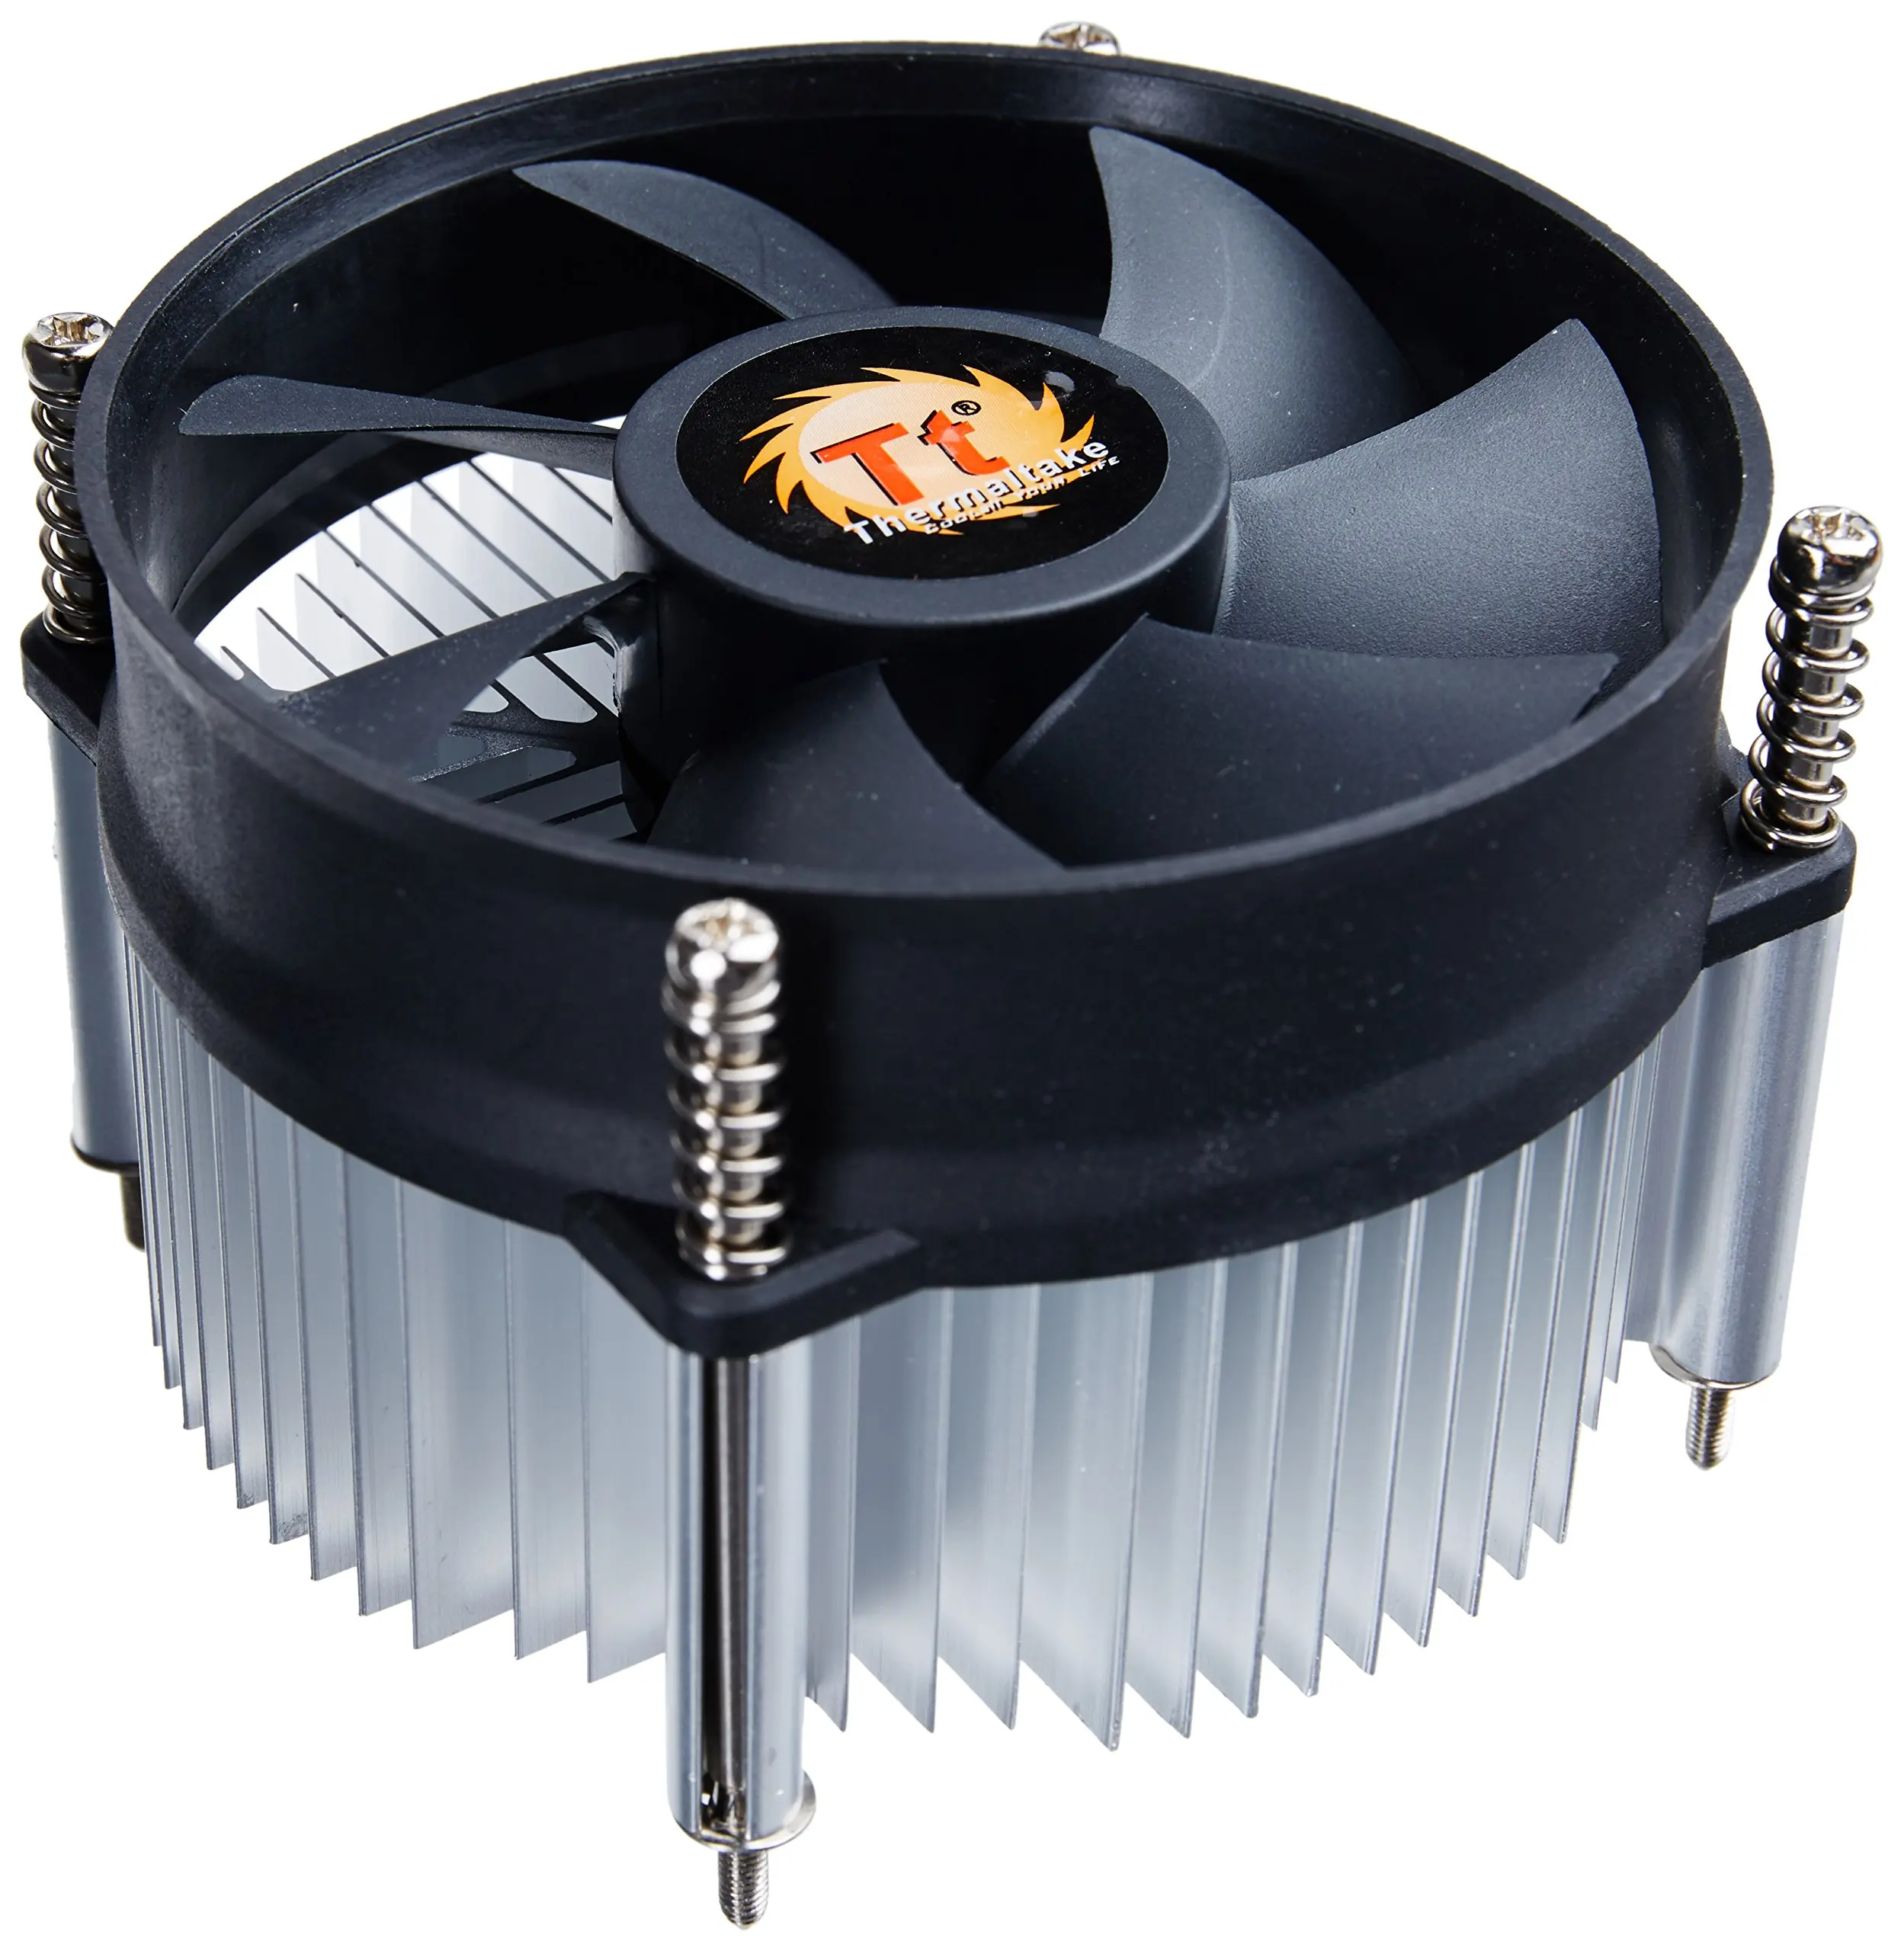 Кулер проценты. Lga775 кулер. Thermaltake 1155 Cooler. ++Thermaltake 775 Cooler. Thermaltake CPU Cooler.